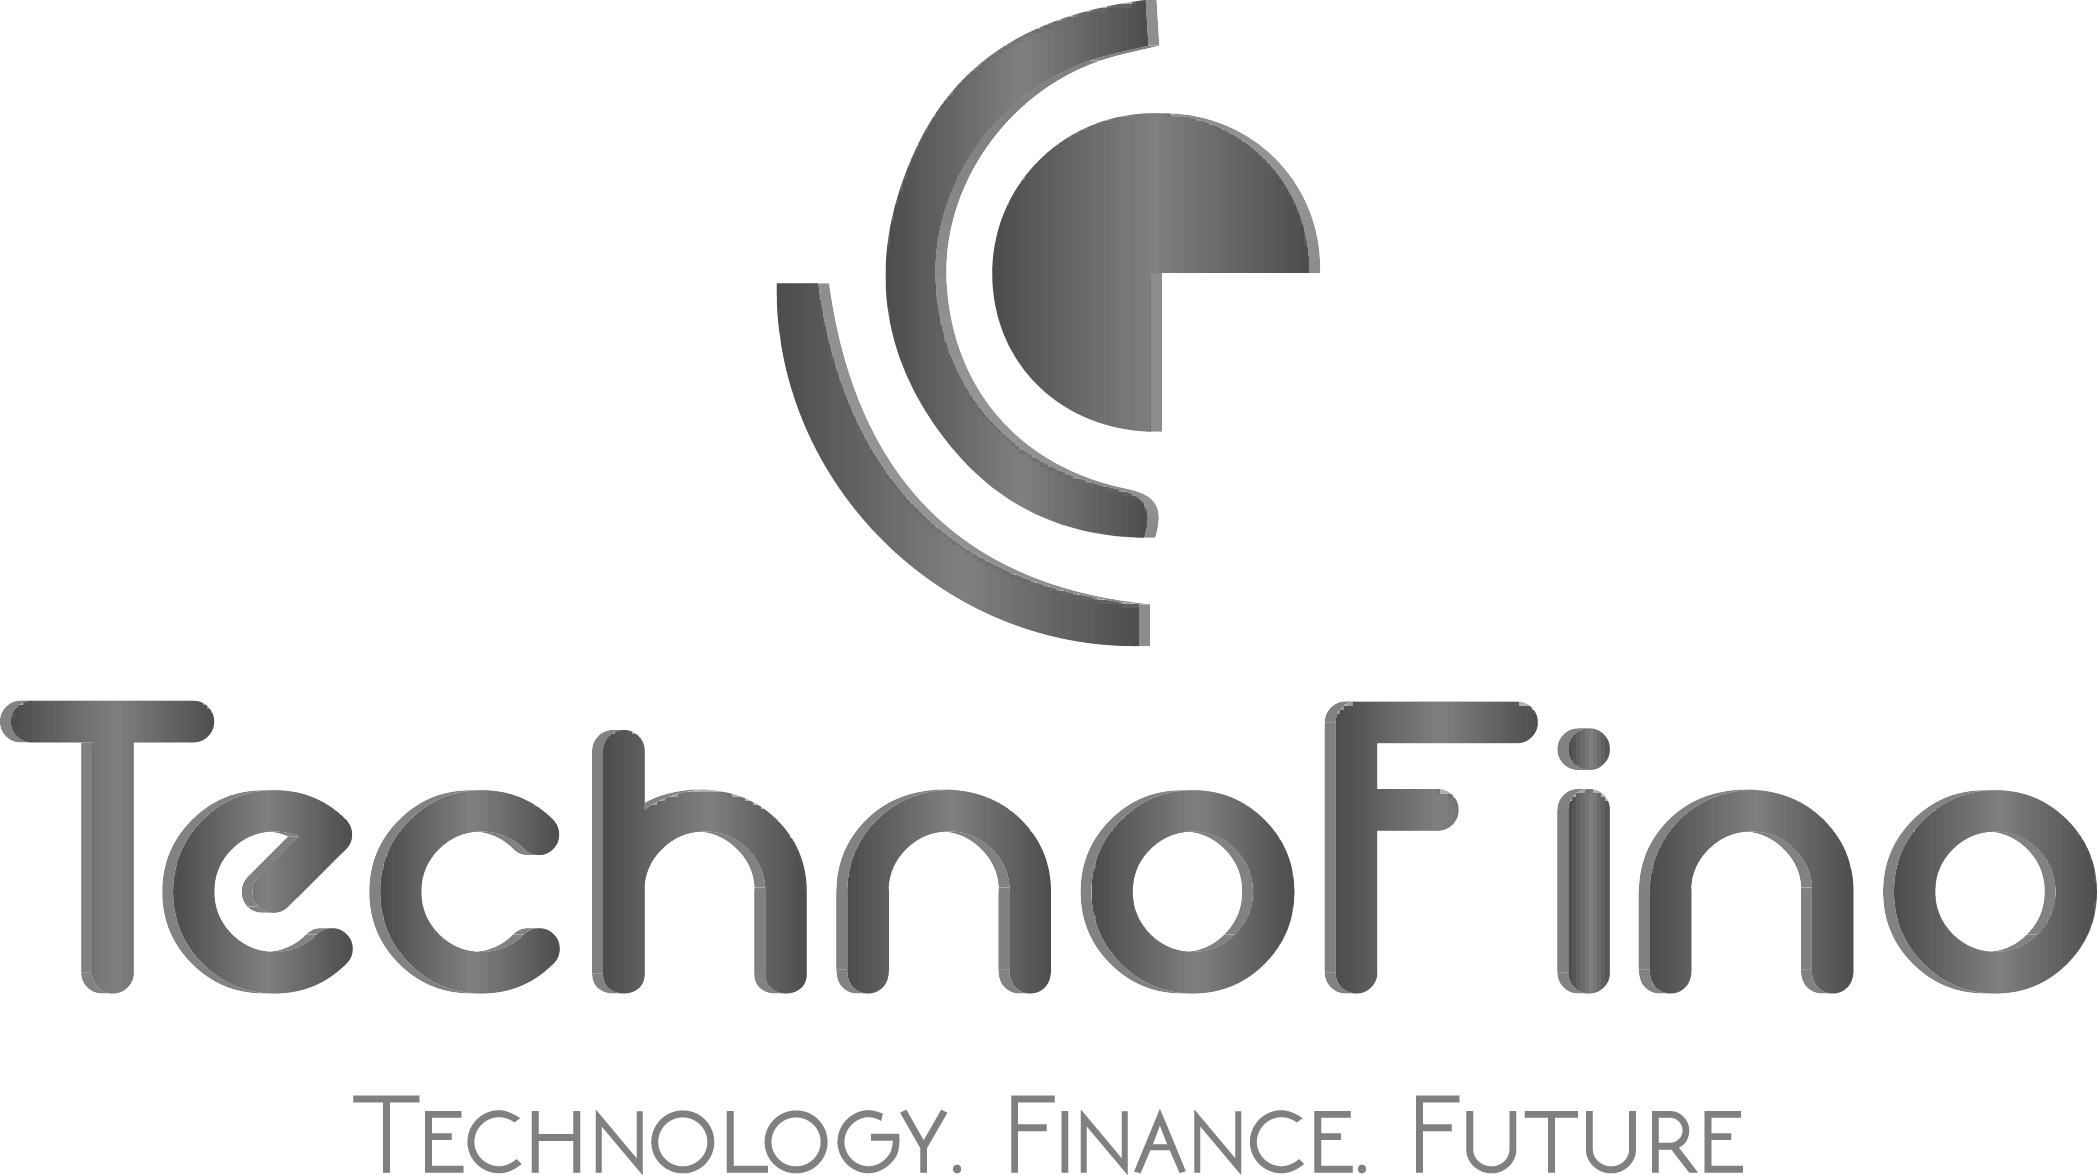 technofnio logo